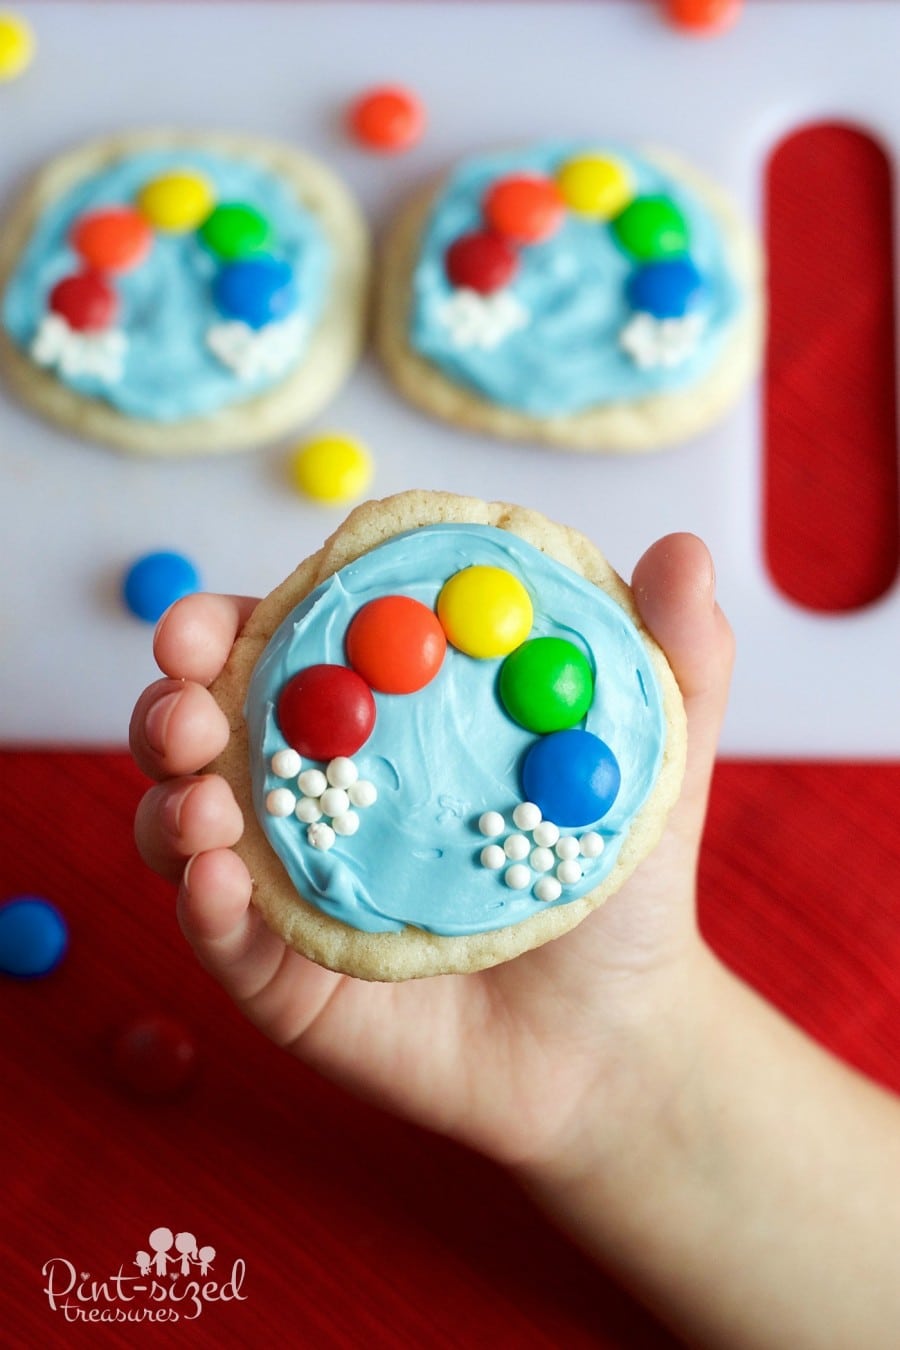 How to make easy rainbow cookies